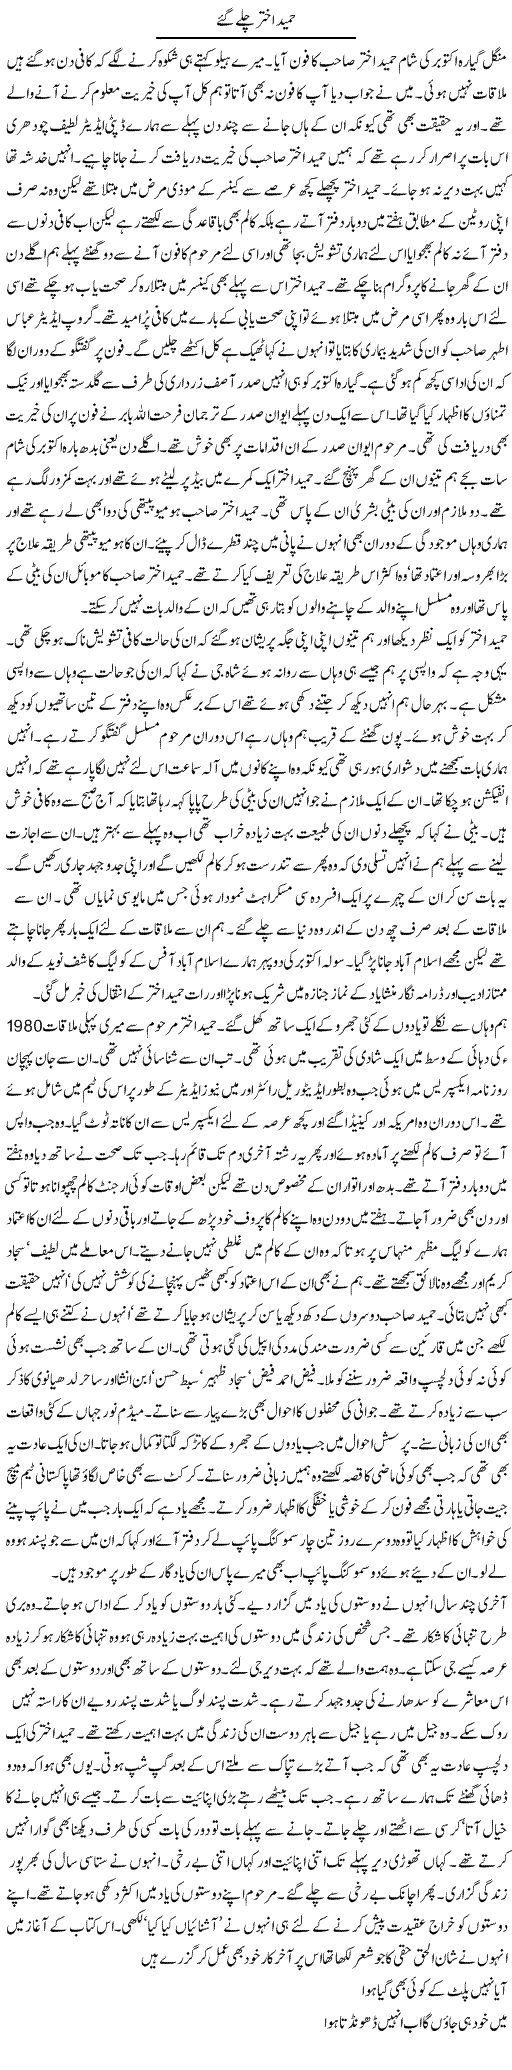 Hameed Akhtar Gone Express Column Iyaz Khan 20 October 2011